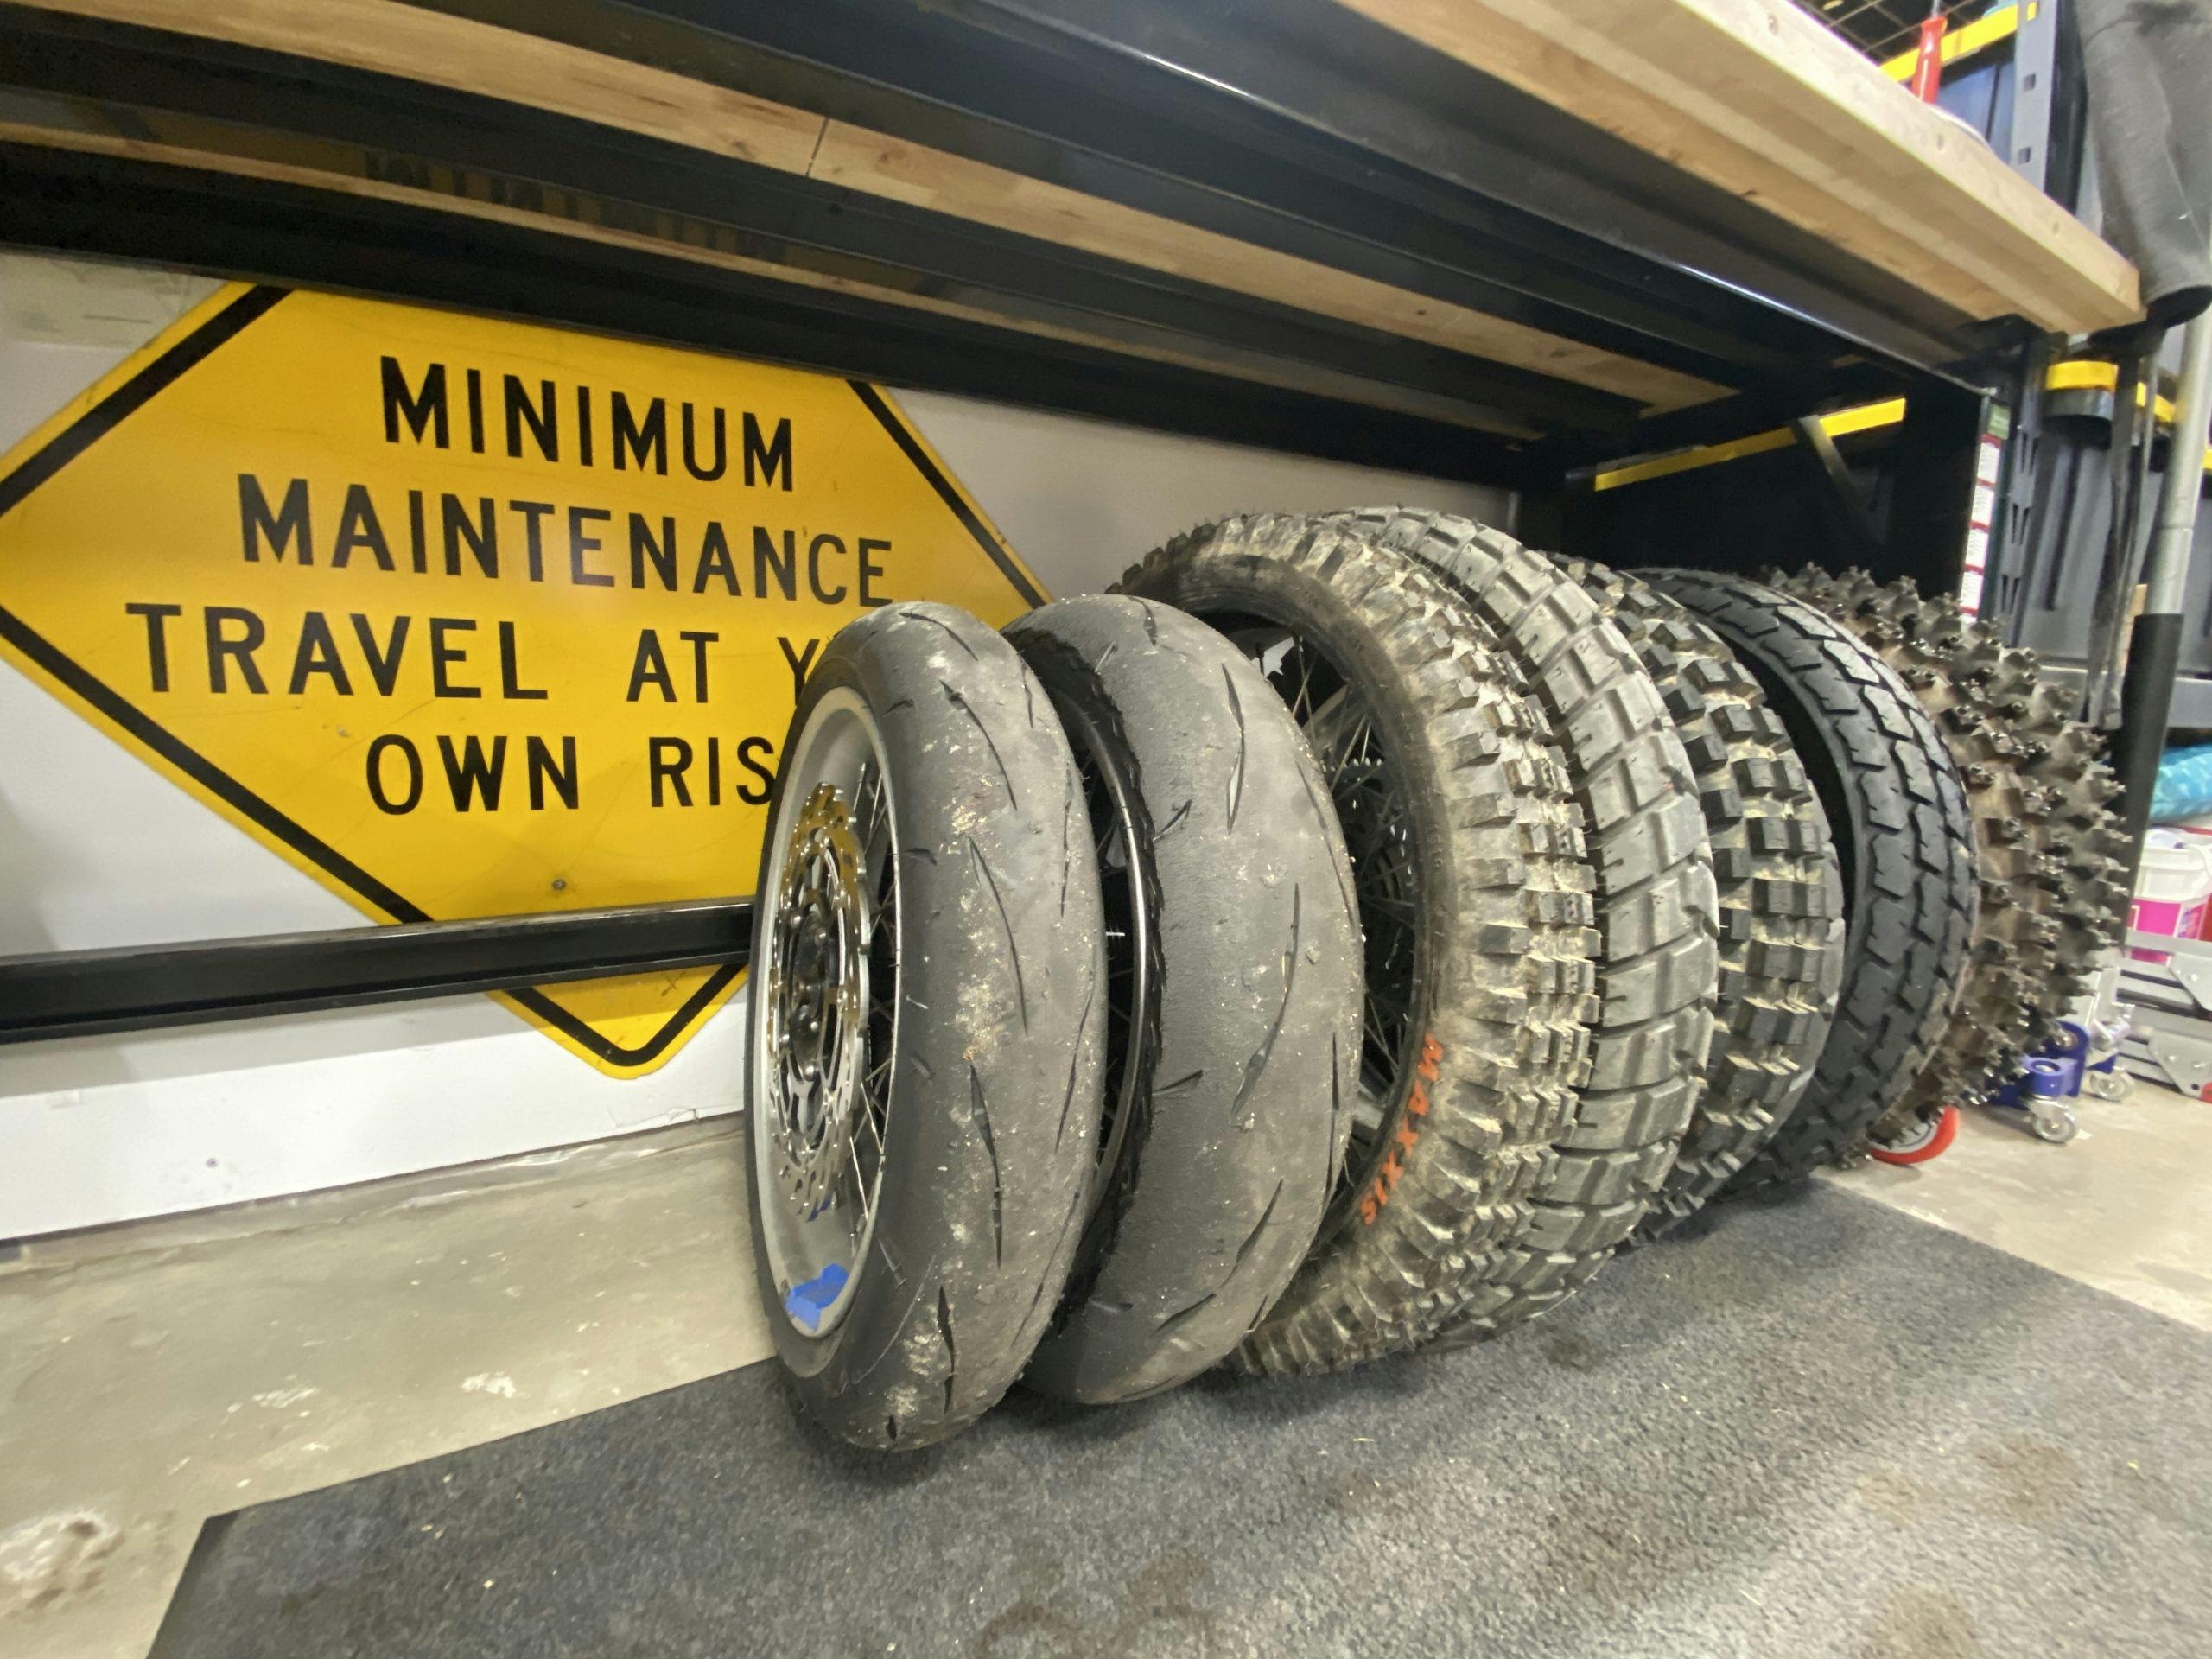 Outside rear tire wear problems - Maintenance/Repairs - Car Talk Community